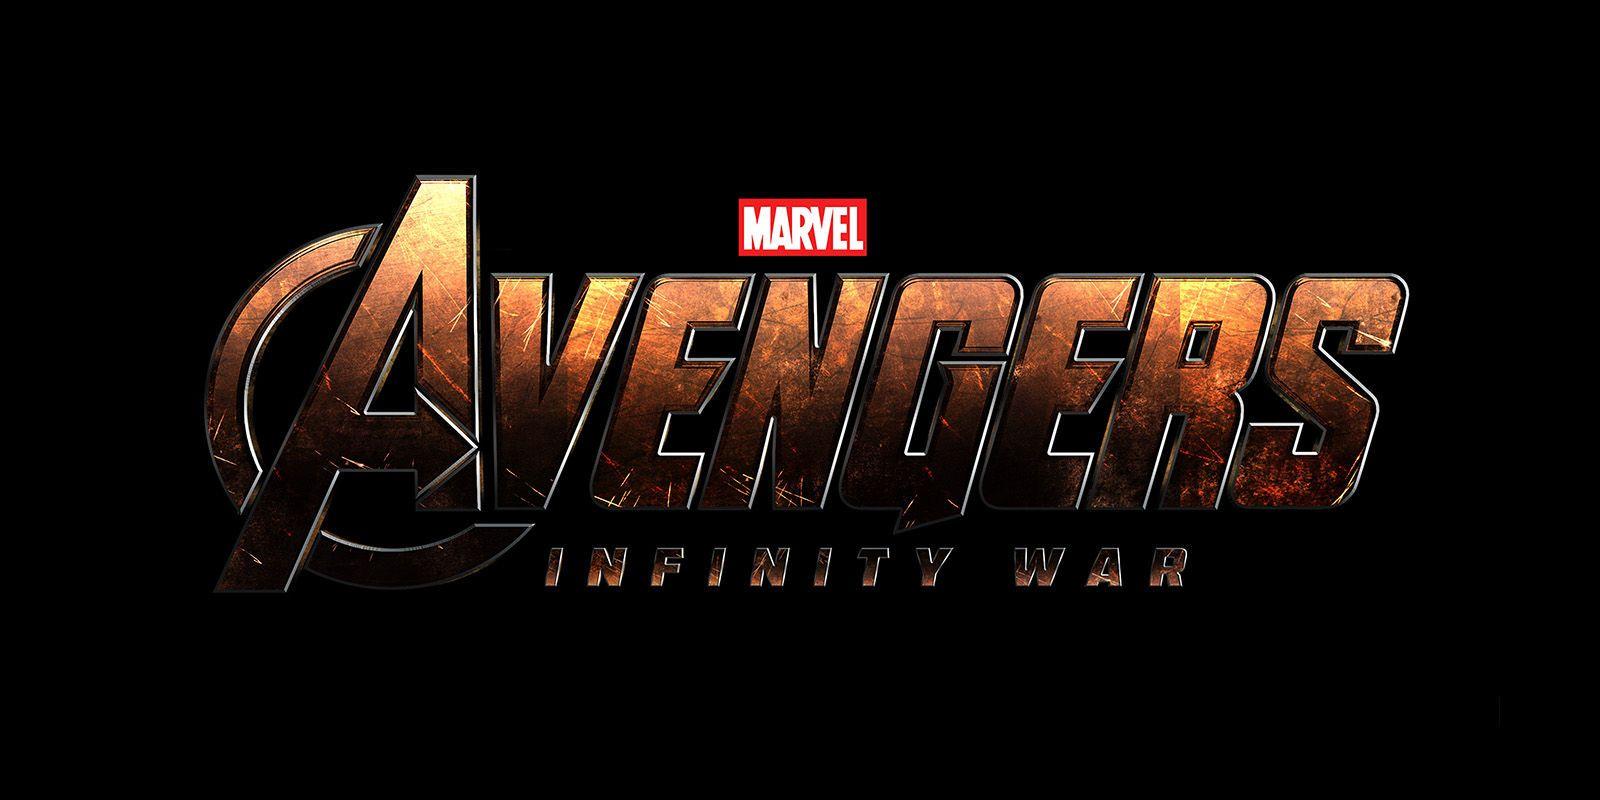 Avengers: Infinity War 355577 Gallery, Image, Posters, Wallpaper